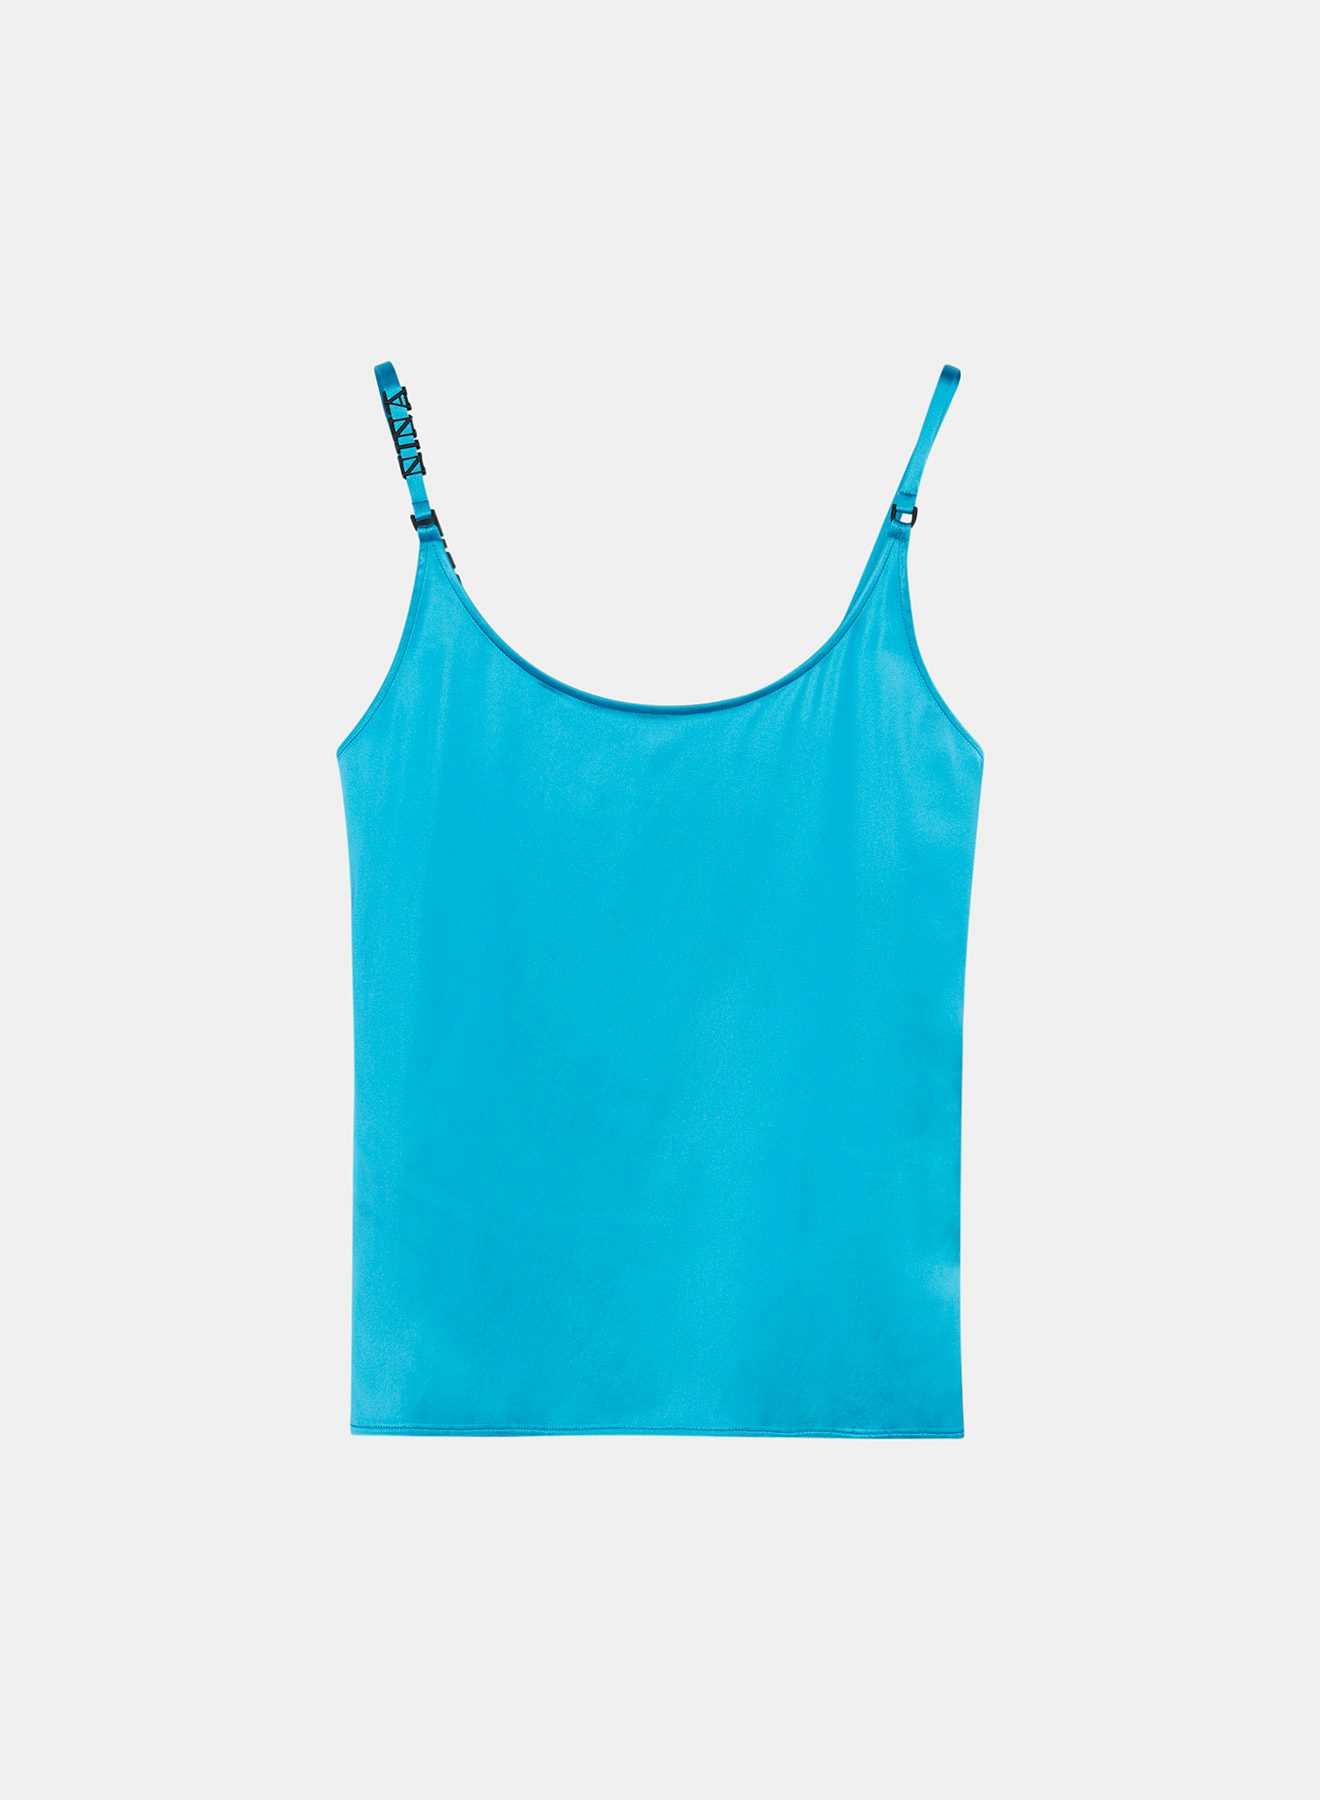 Cyan Blue Satin Camisole Zipped in the Back with Nina Ricci Logo on the Shoulder Strap - Nina Ricci